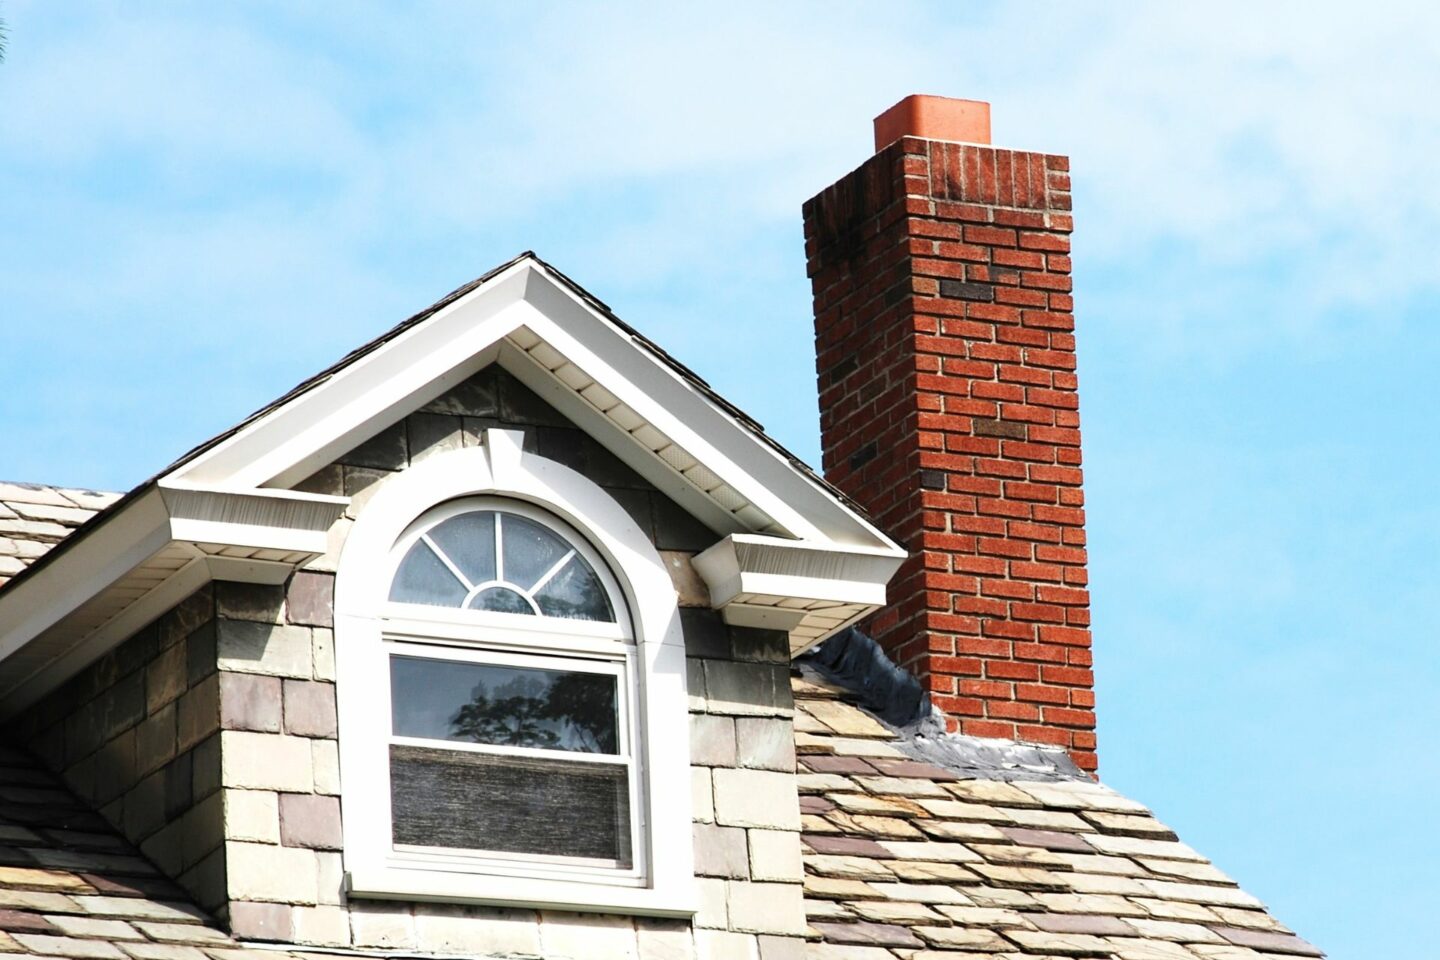 A brick chimney that needs chimney maintenance